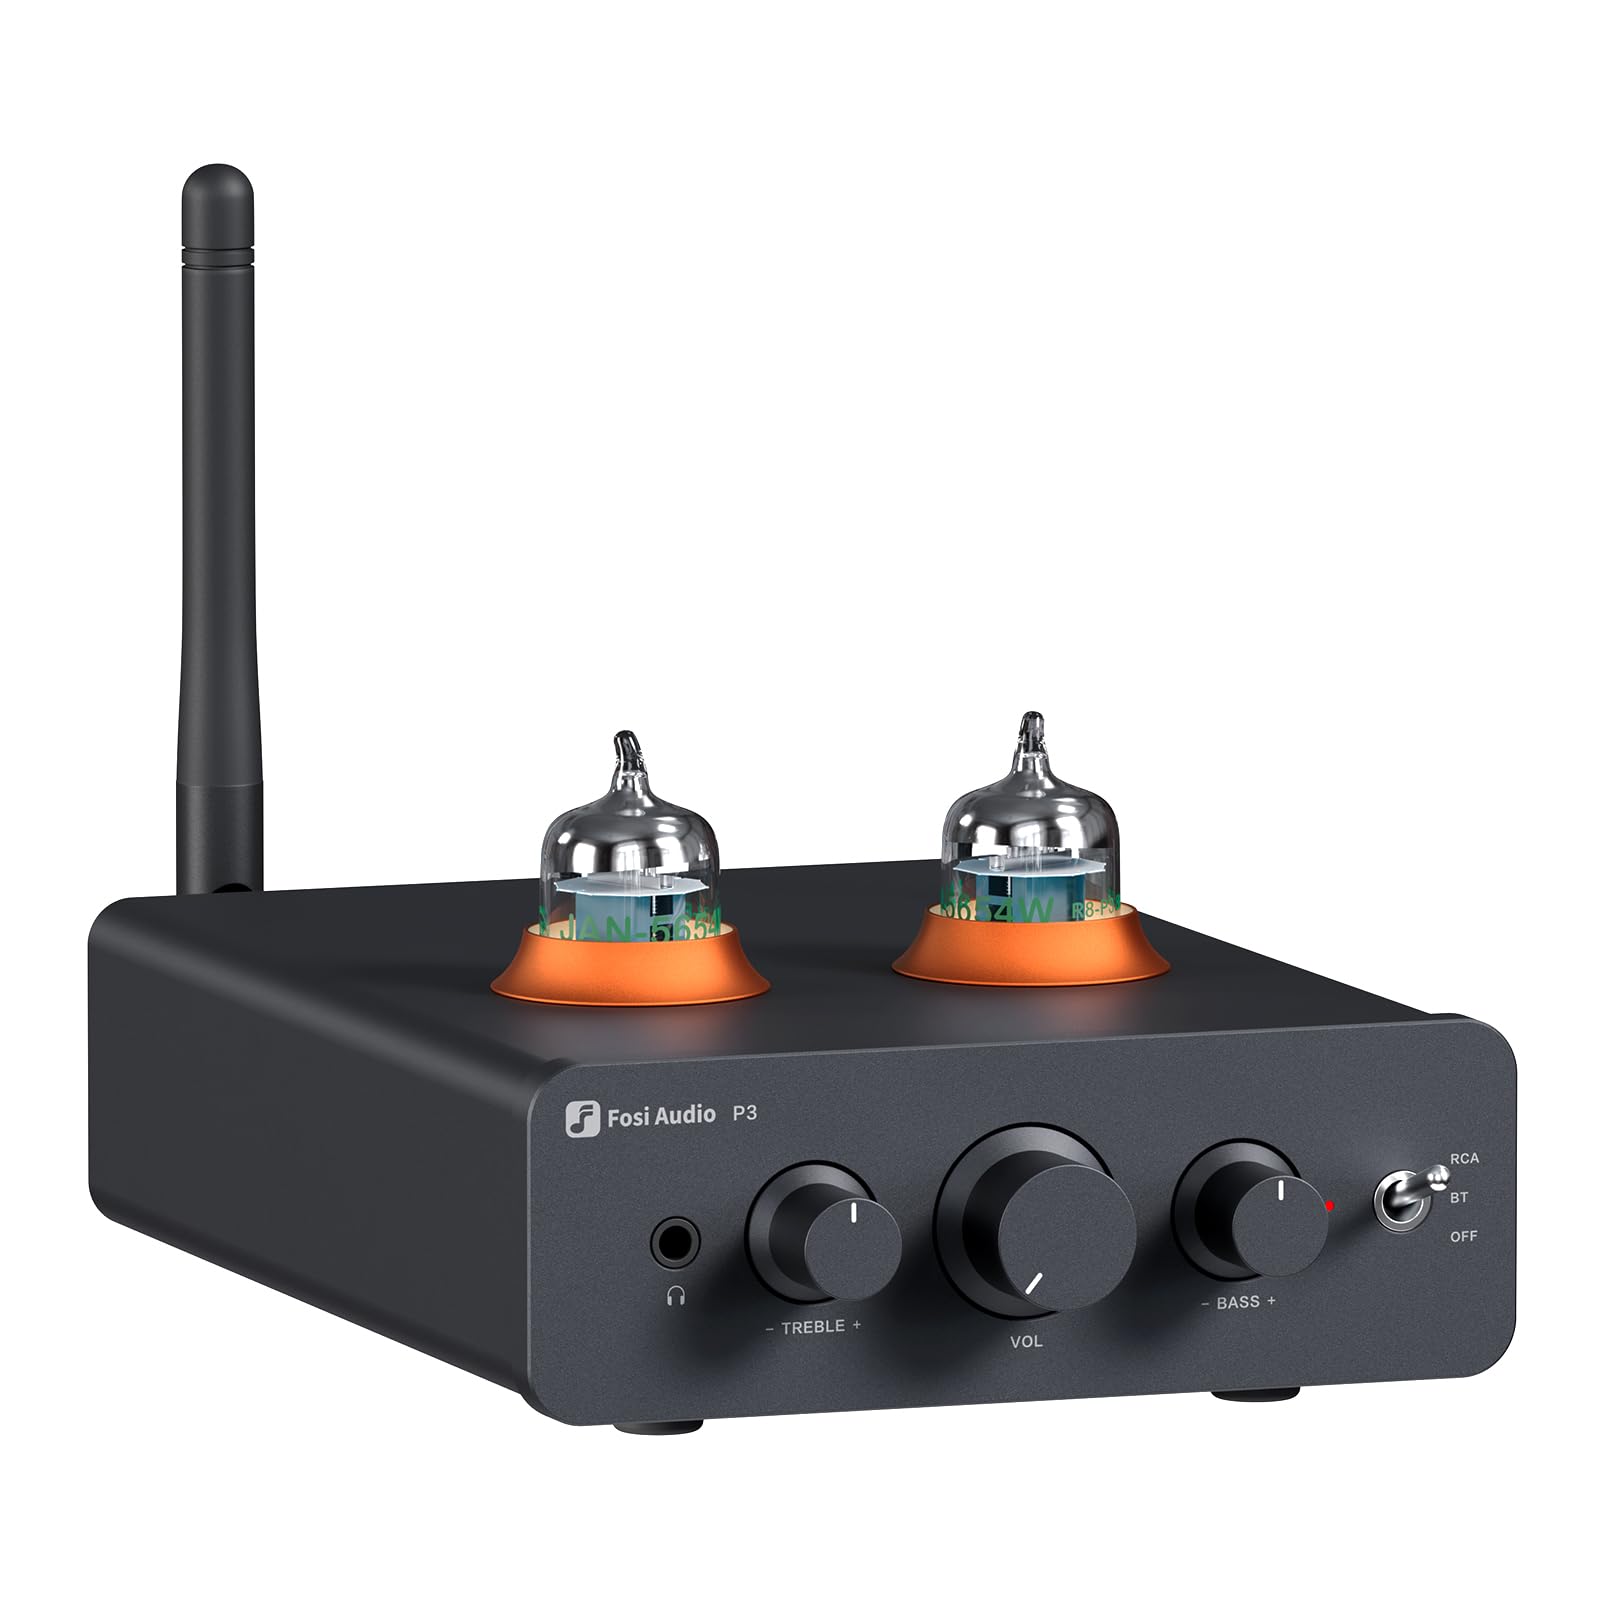 Fosi Audio P3 真空管 プリアンプ ヘッドホンアンプ 小型 ホームオーディオ ミニ真空管プリアンプ Bluetooth aptX LL HD 高低音制御対応 HiFi ステレオ アクティブスピーカー適用 RCA/AUX ポート搭載 電源付き